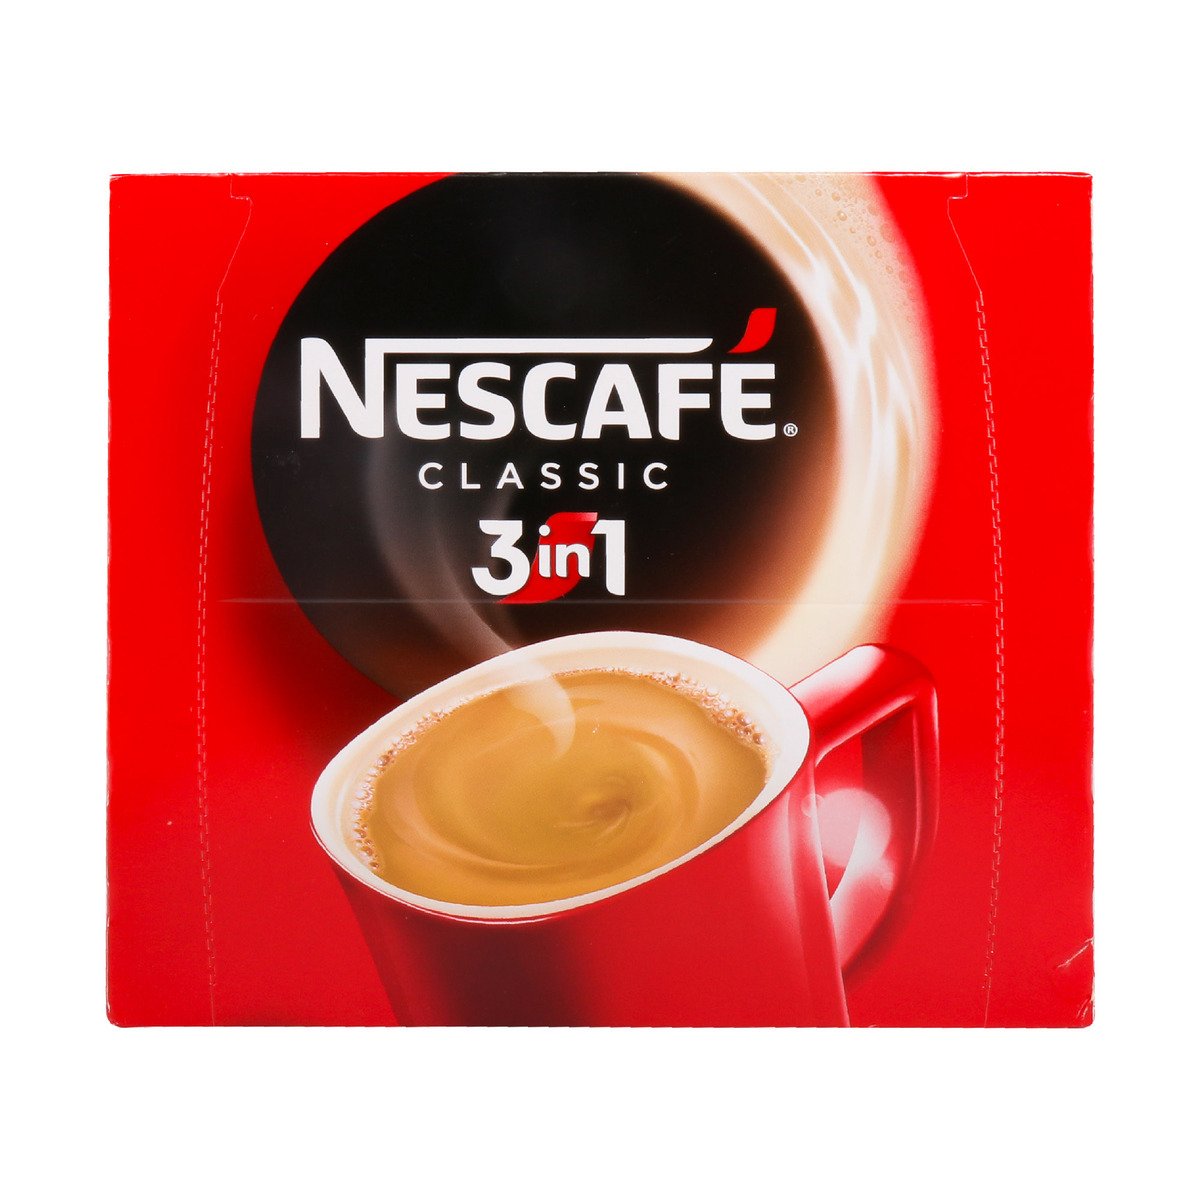 Nescafe 3in1 Coffee Classic 20 x 20g